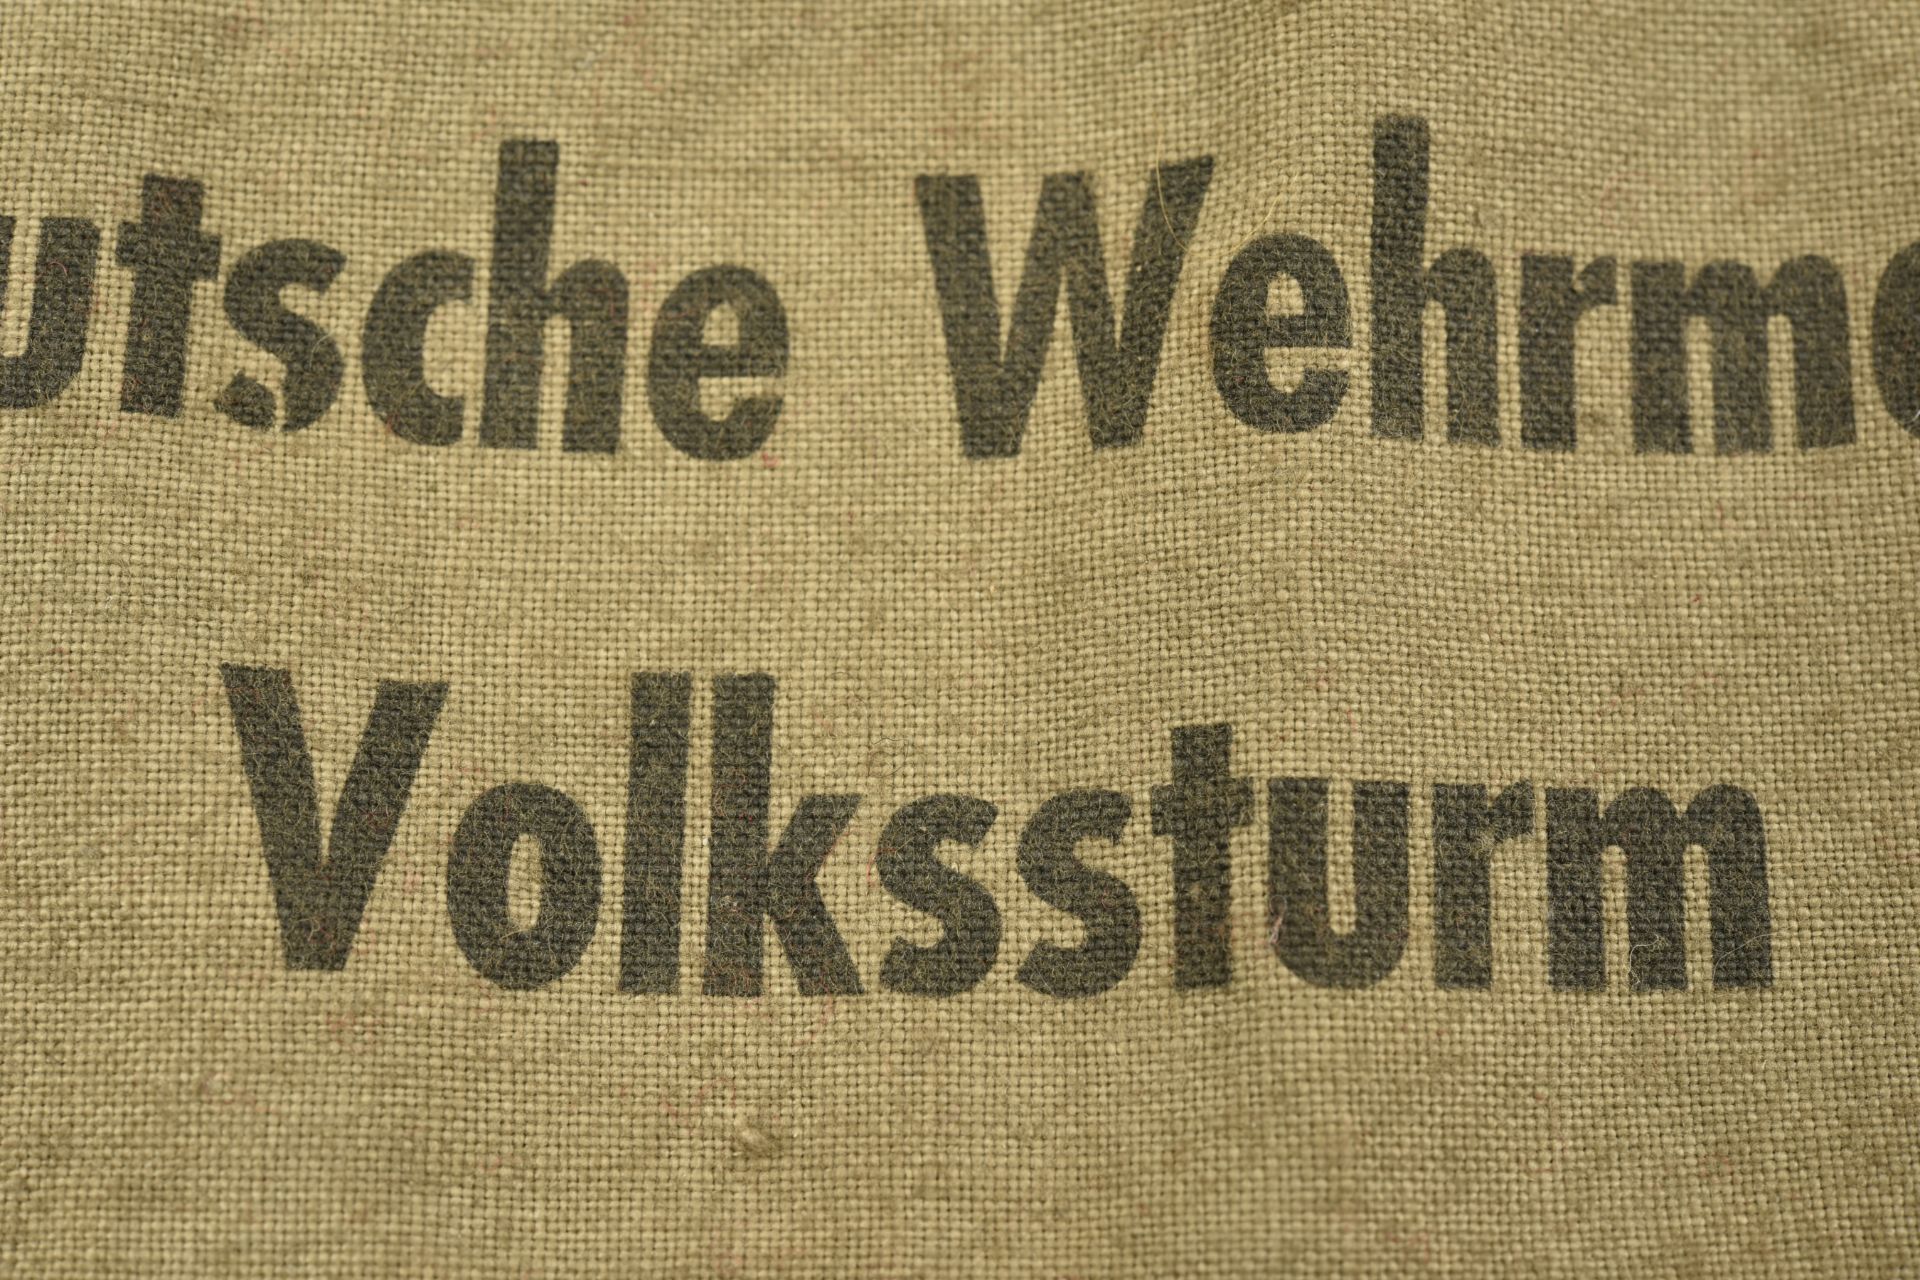 Brassard Volkssturm. Volksturm armband. - Image 2 of 4